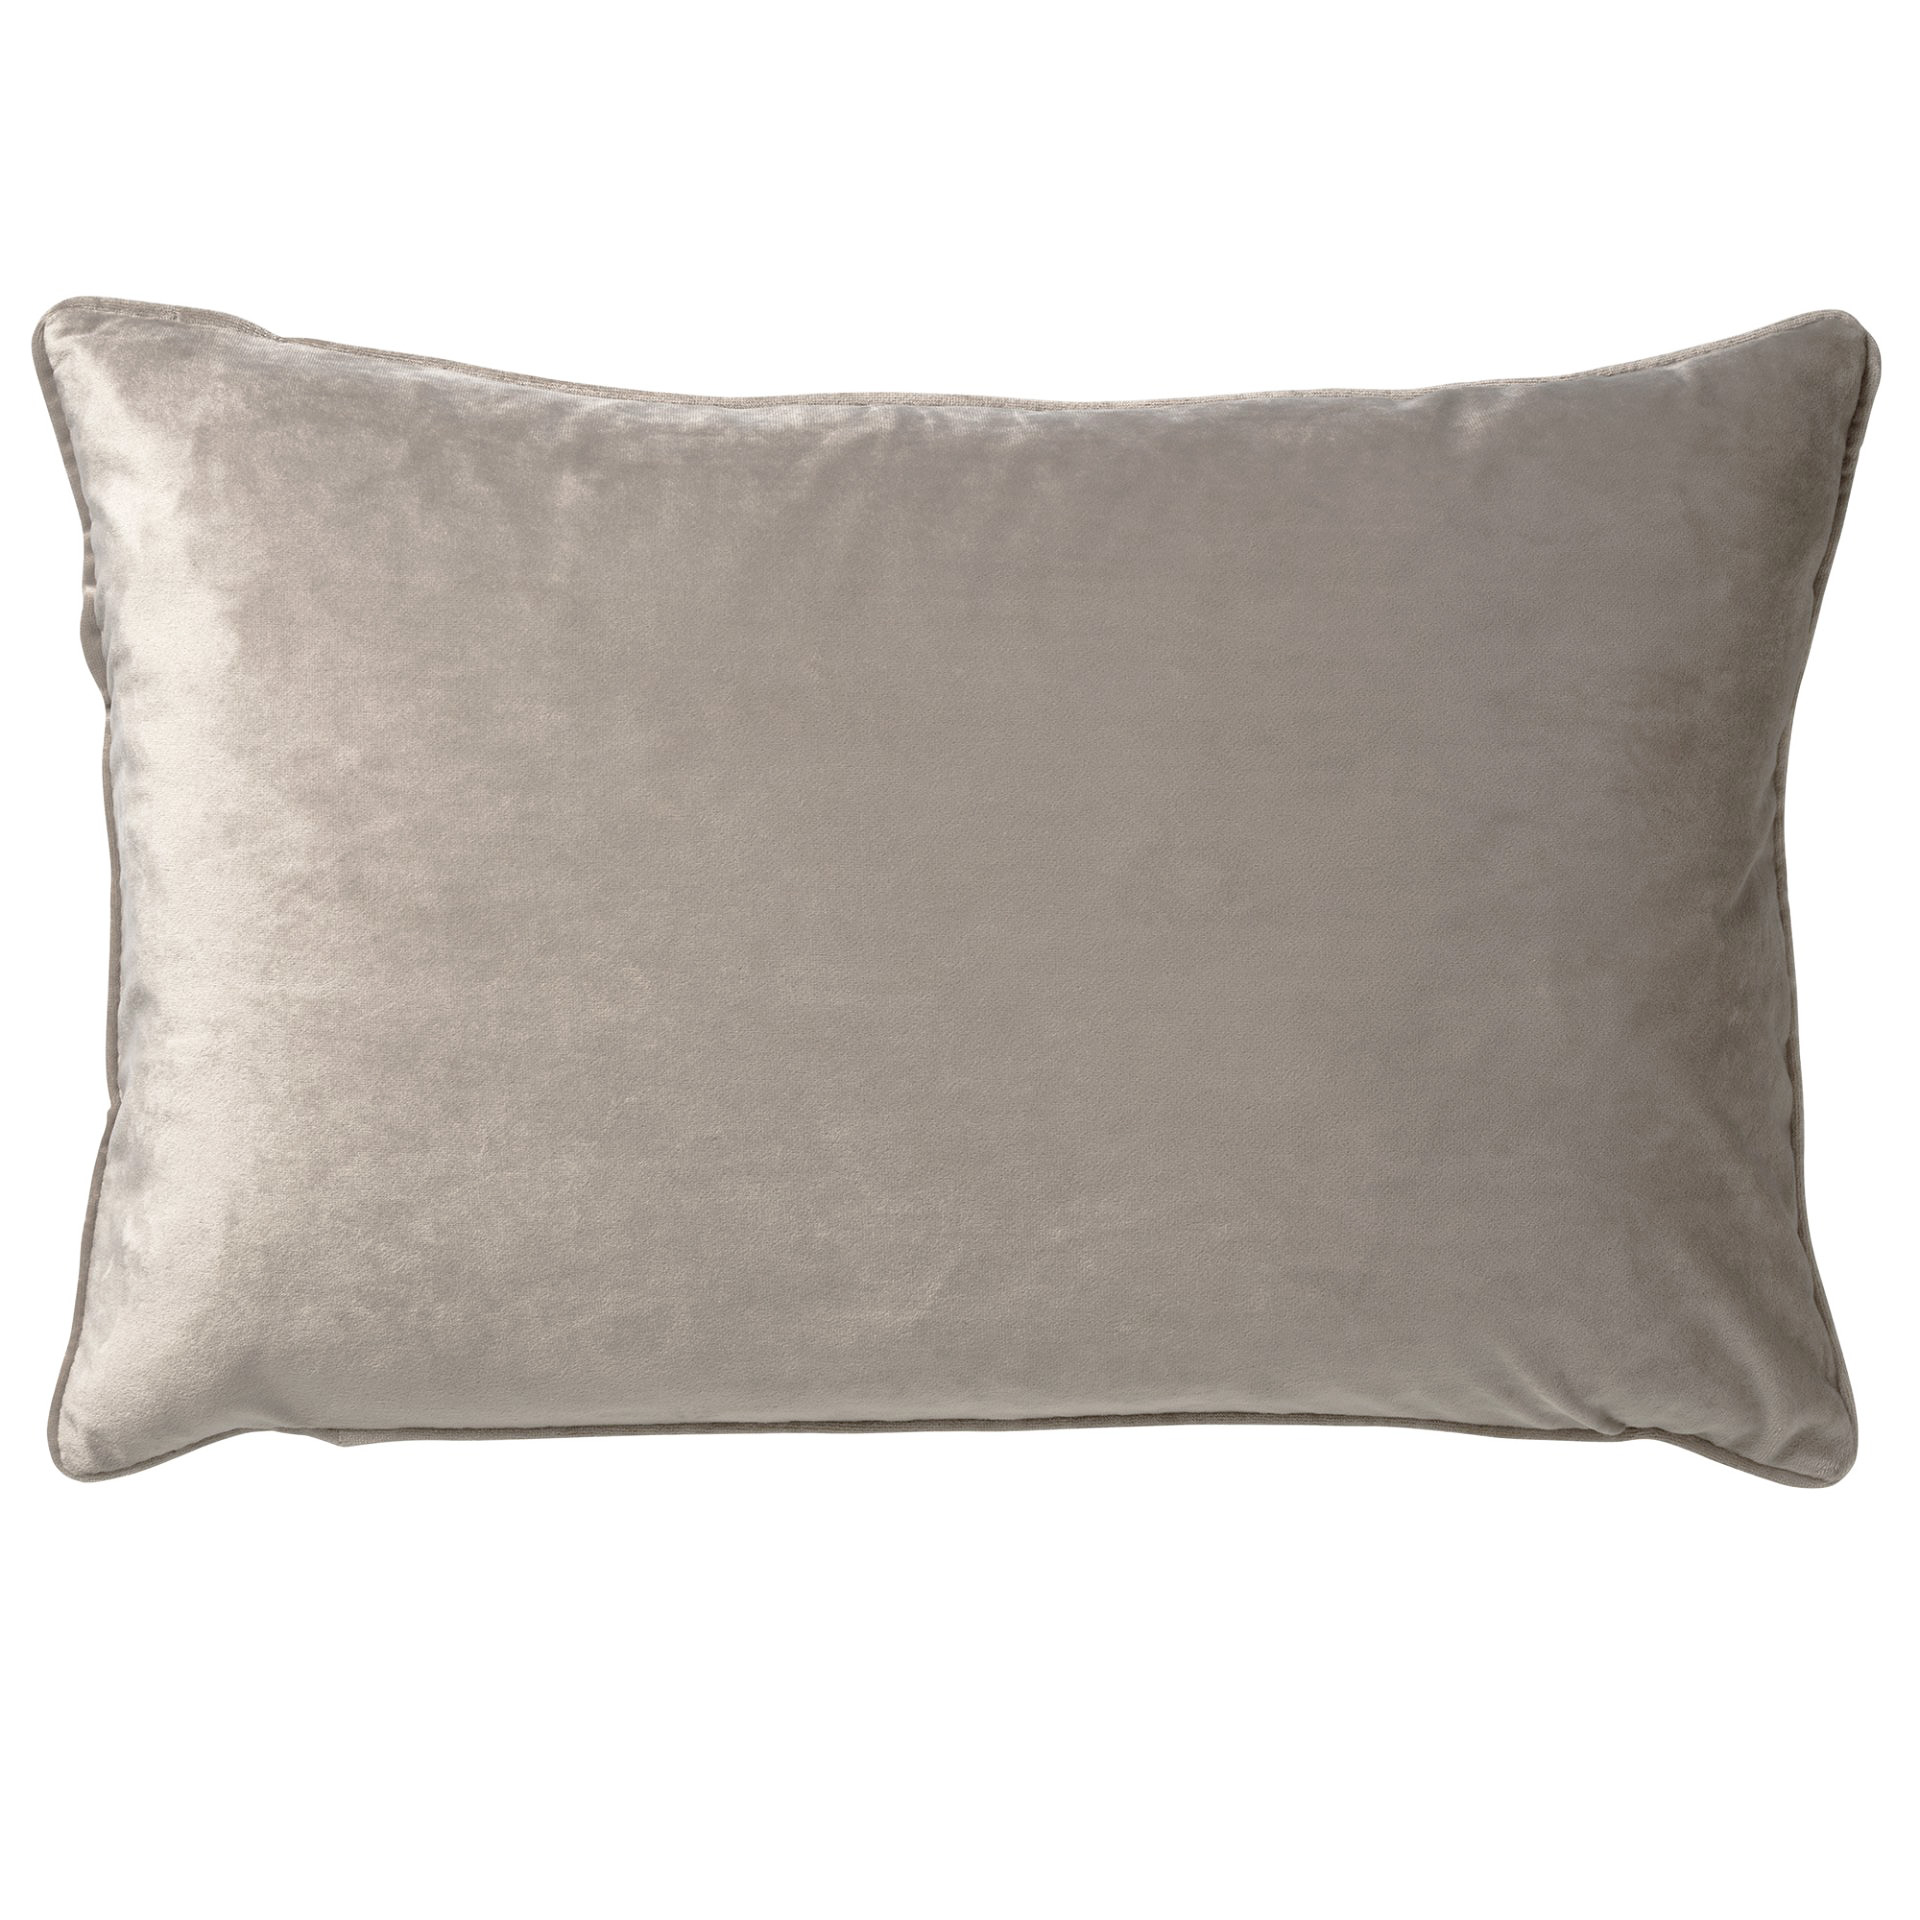 FINN - Cushion velvet 40x60 cm - Pumice Stone - beige